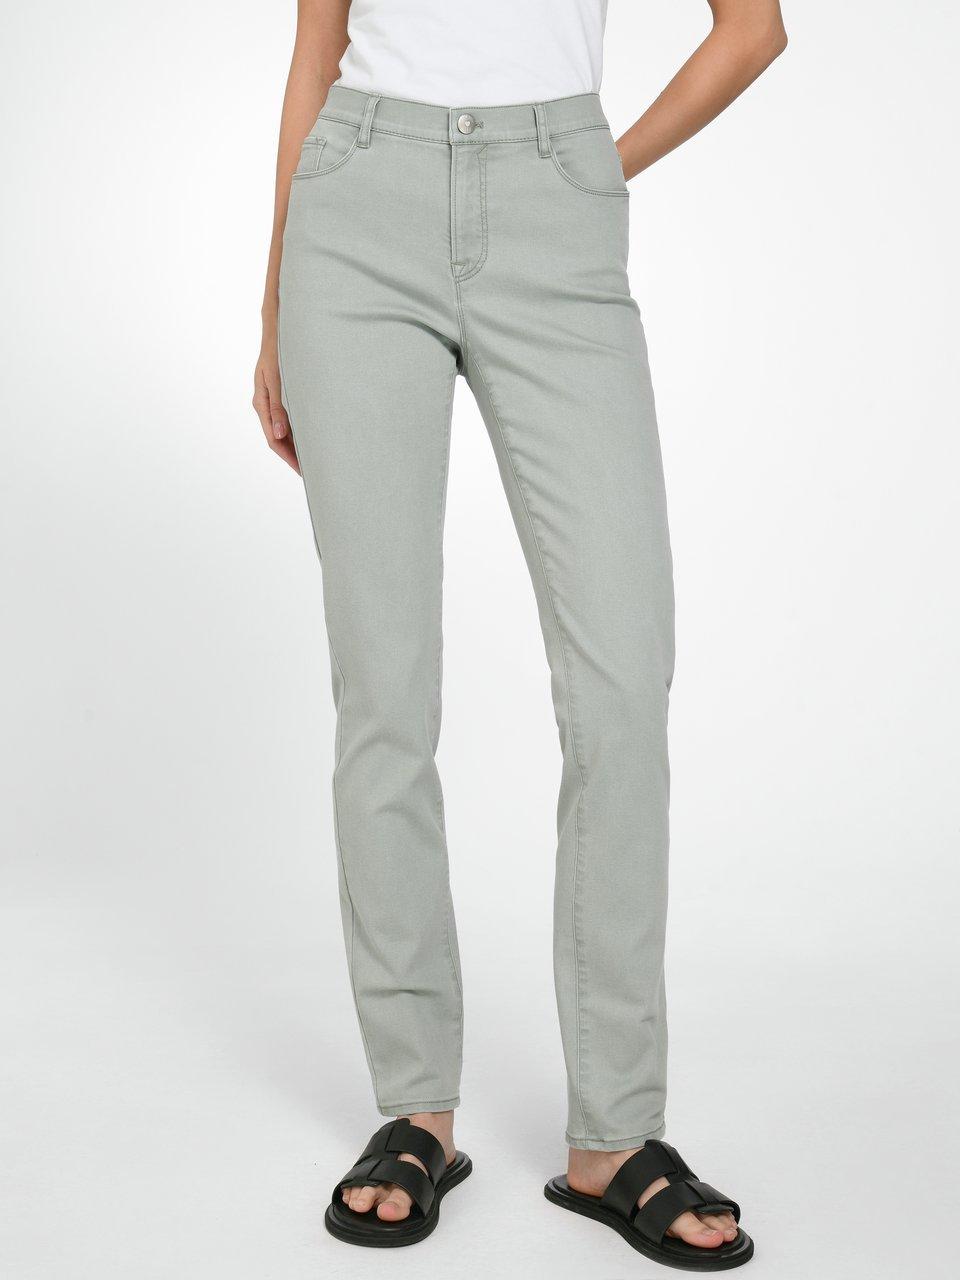 Modell denim Slim - Salbei Fit-Jeans Feel Good - Mary Brax